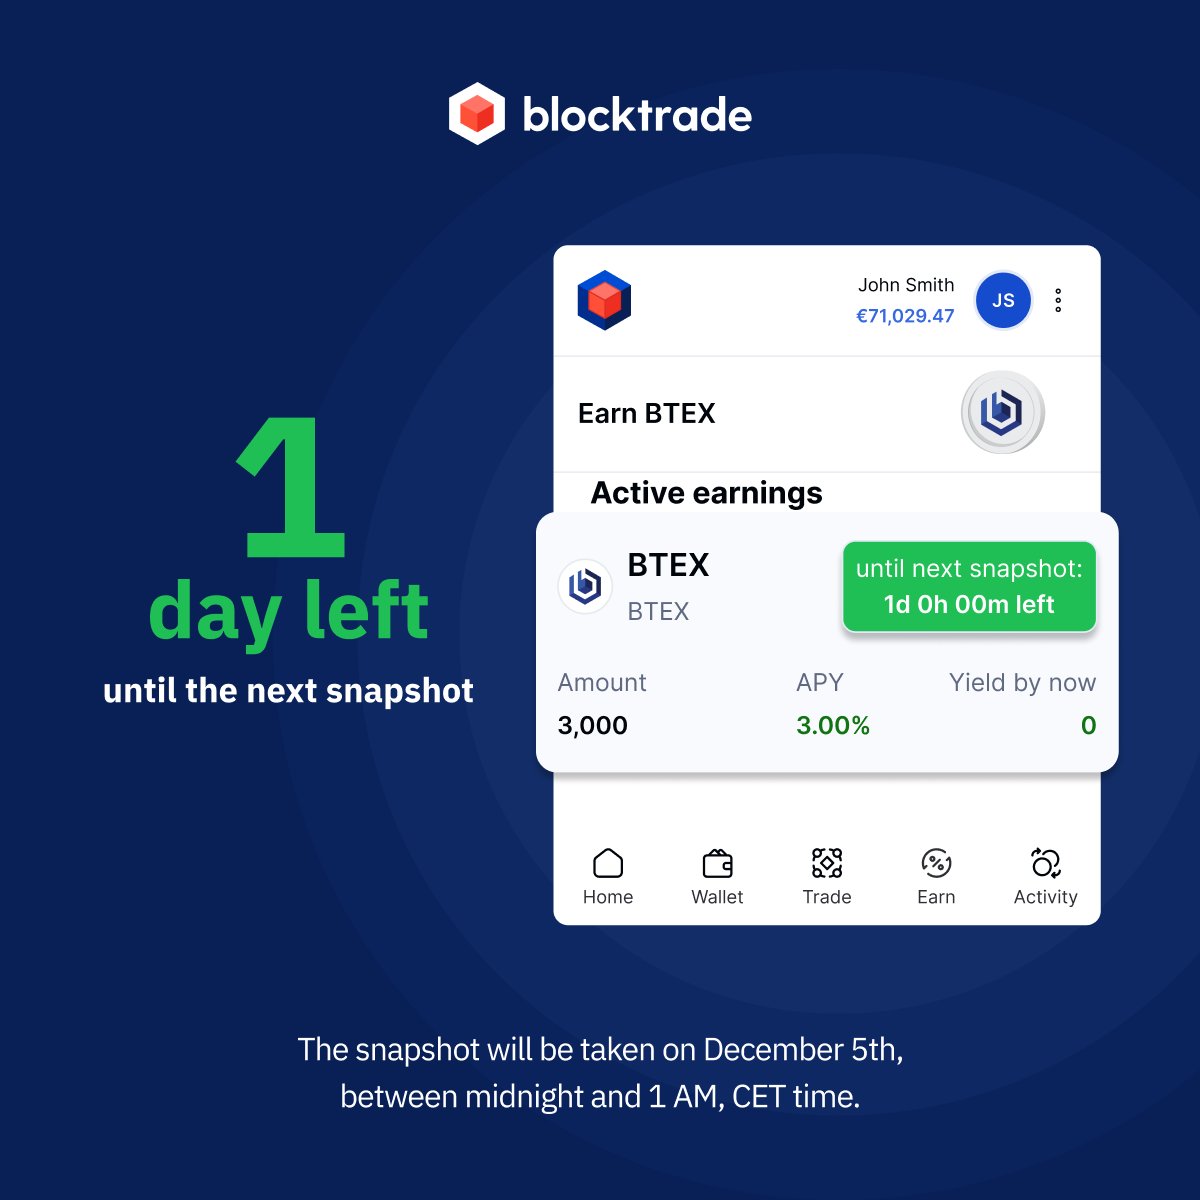 Blocktrade 2.1 is here - Blocktrade